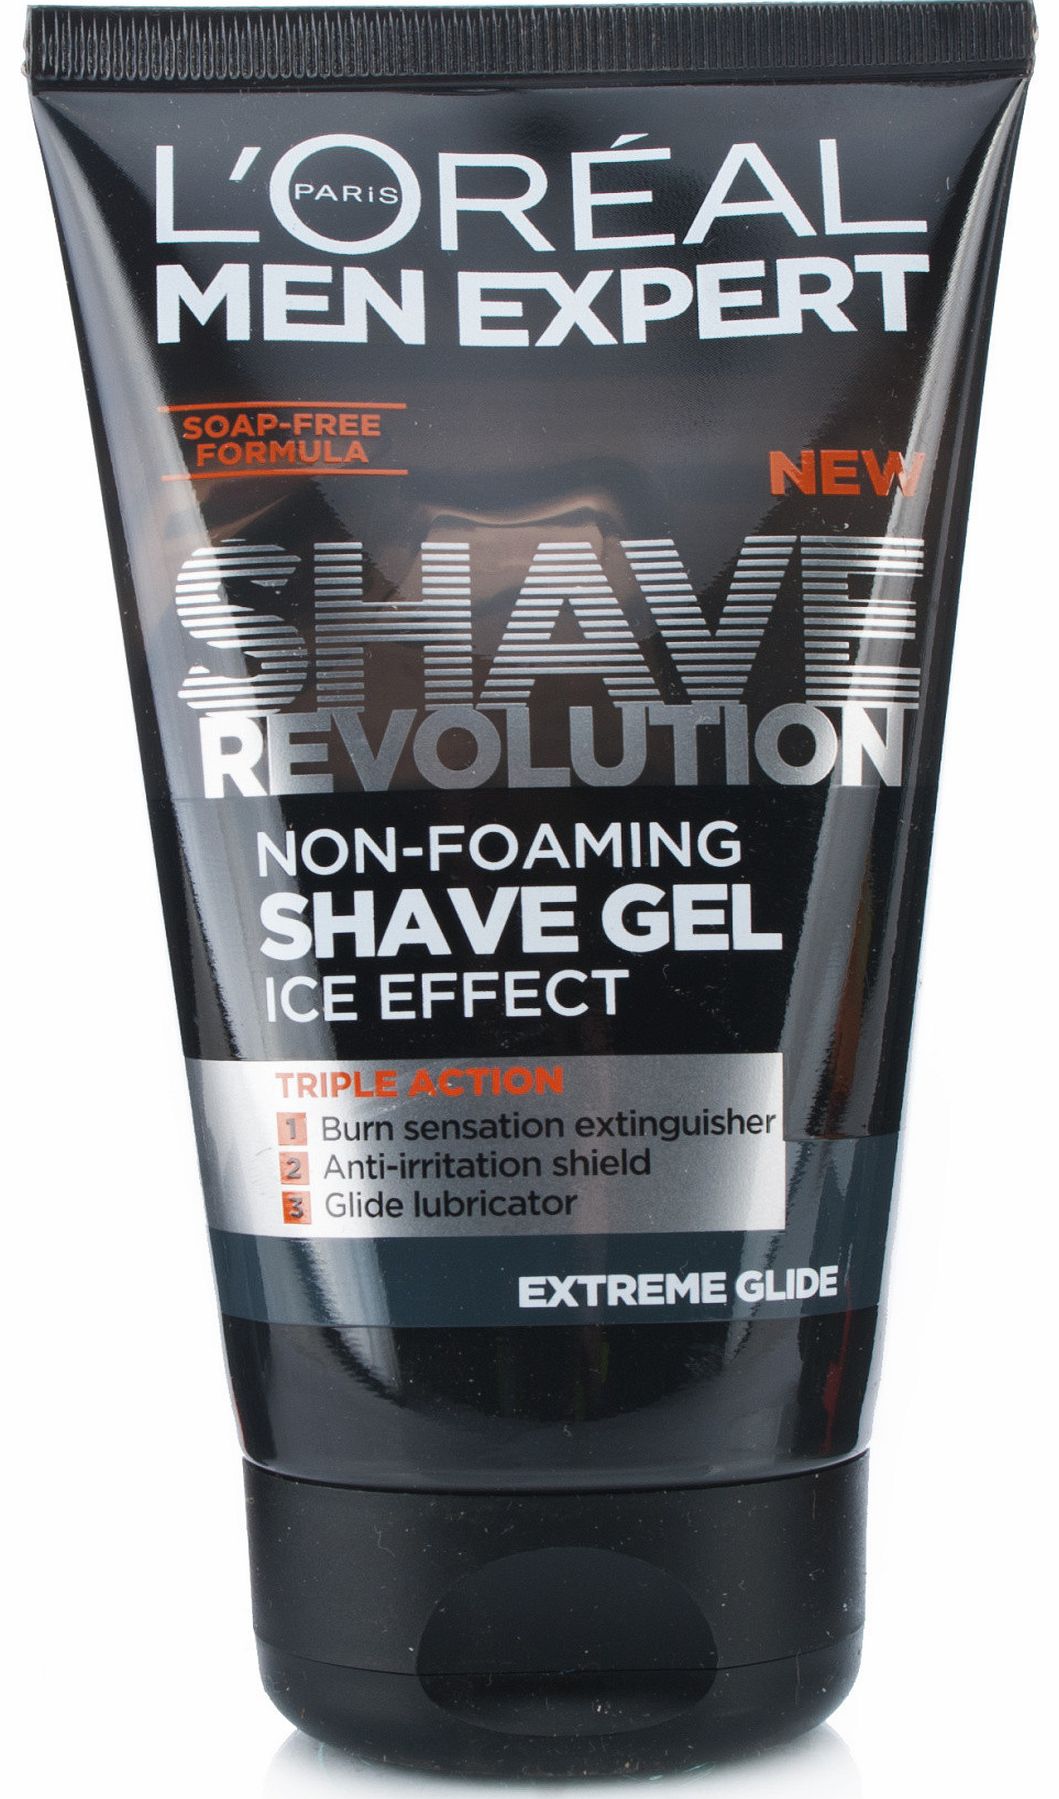 L'Oreal Men Expert Shave Revolution Extreme